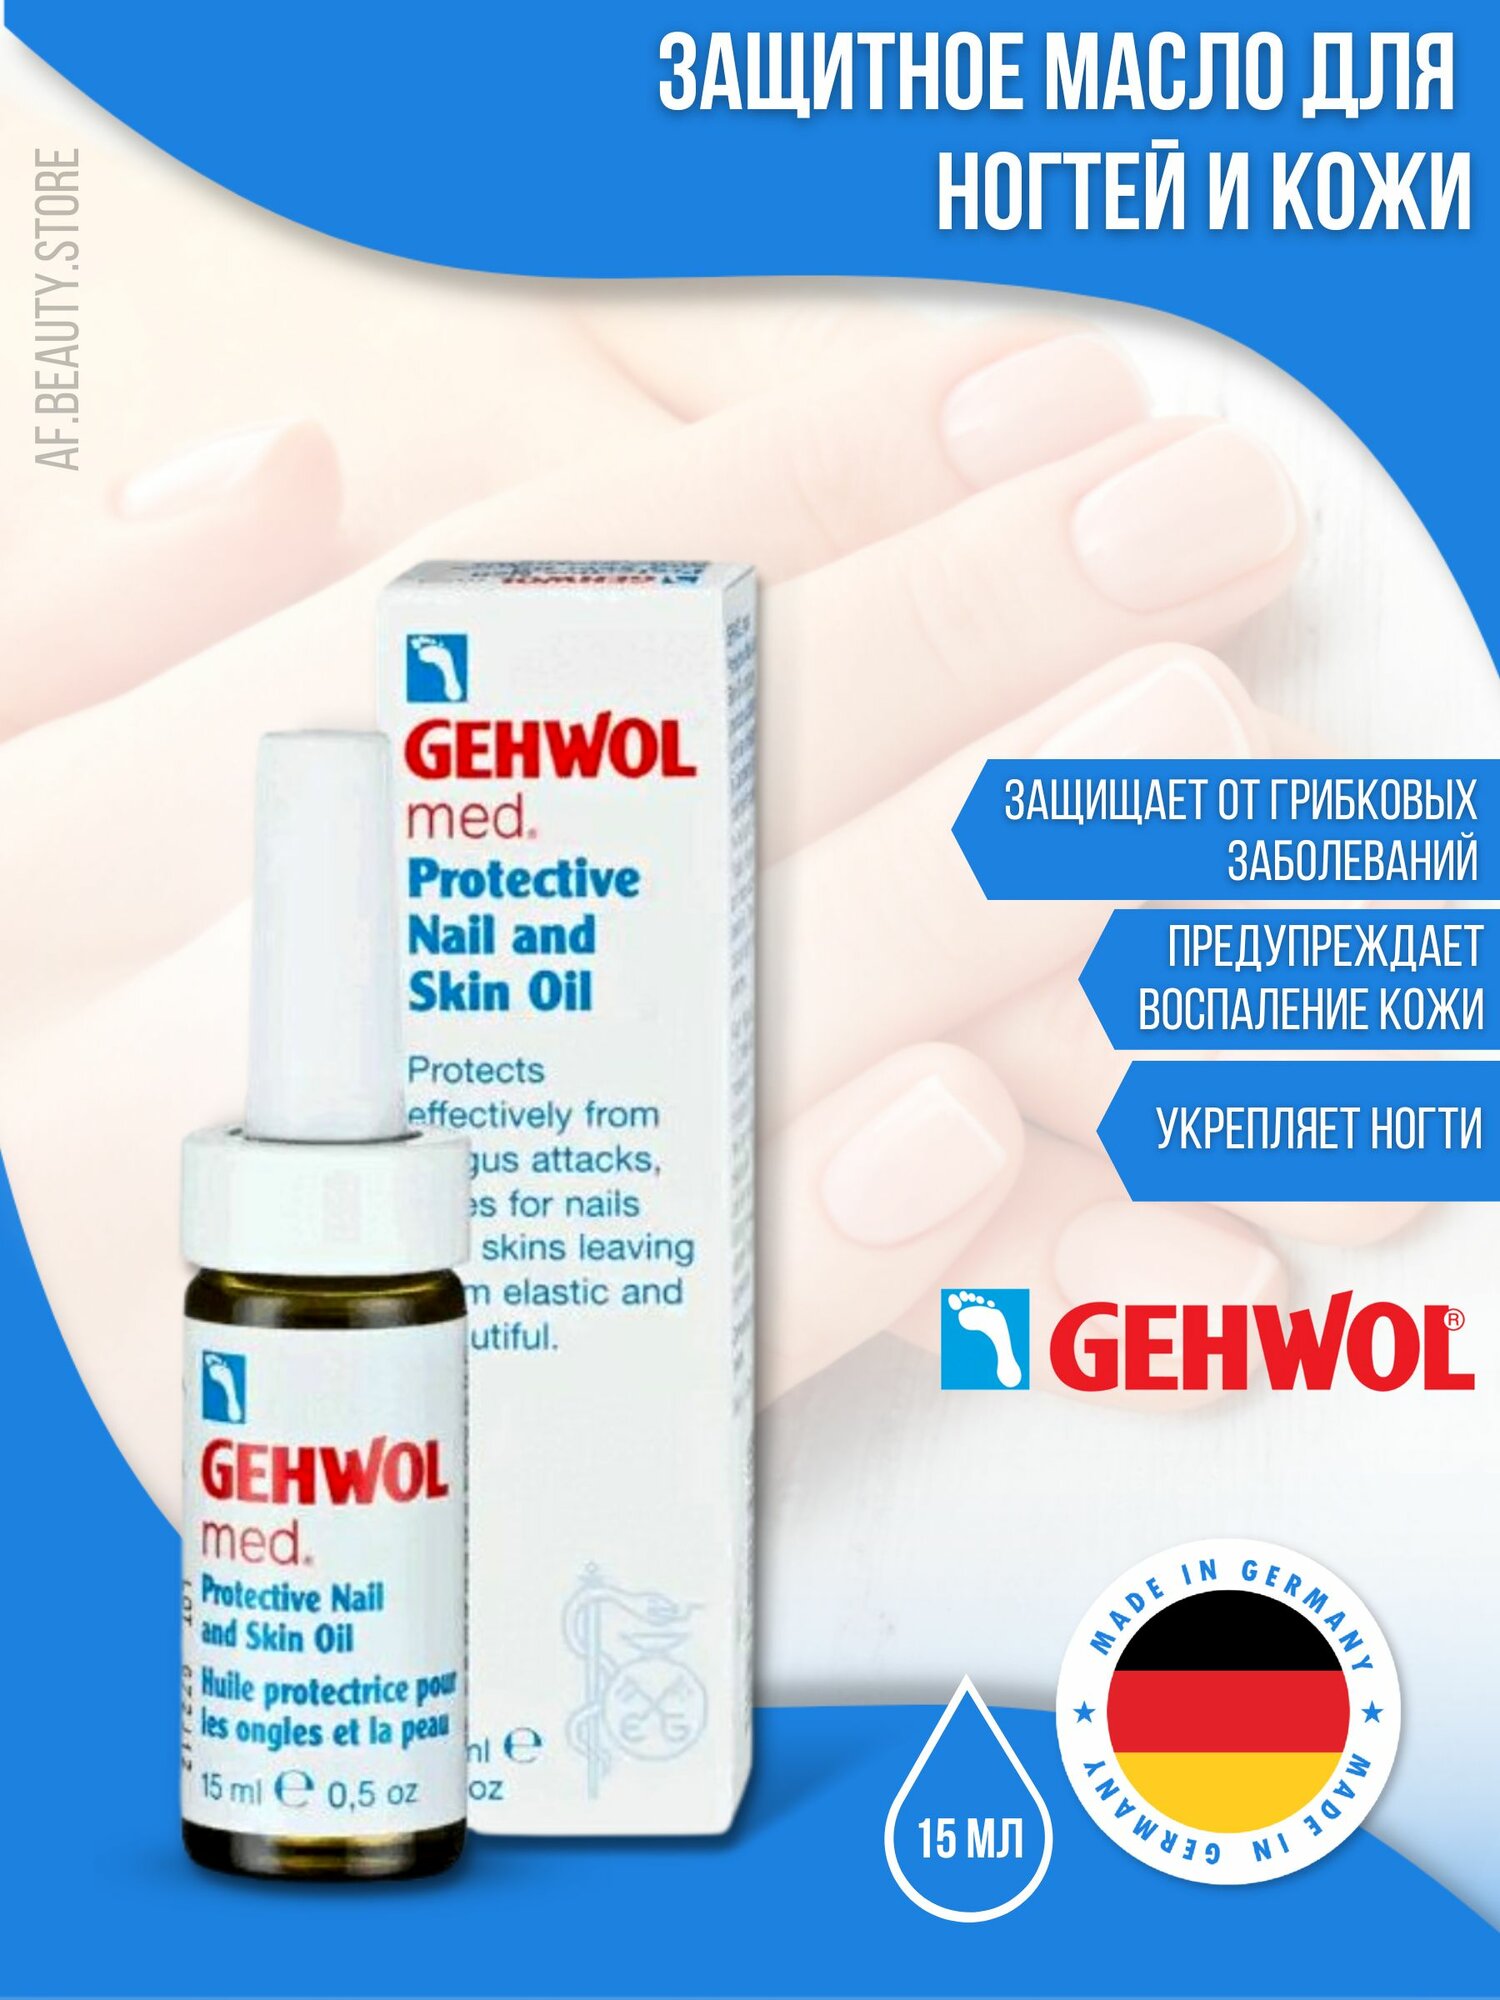 Gehwol Med Protective Nail and Skin Oil - Защитное масло для ногтей и кожи 15 мл